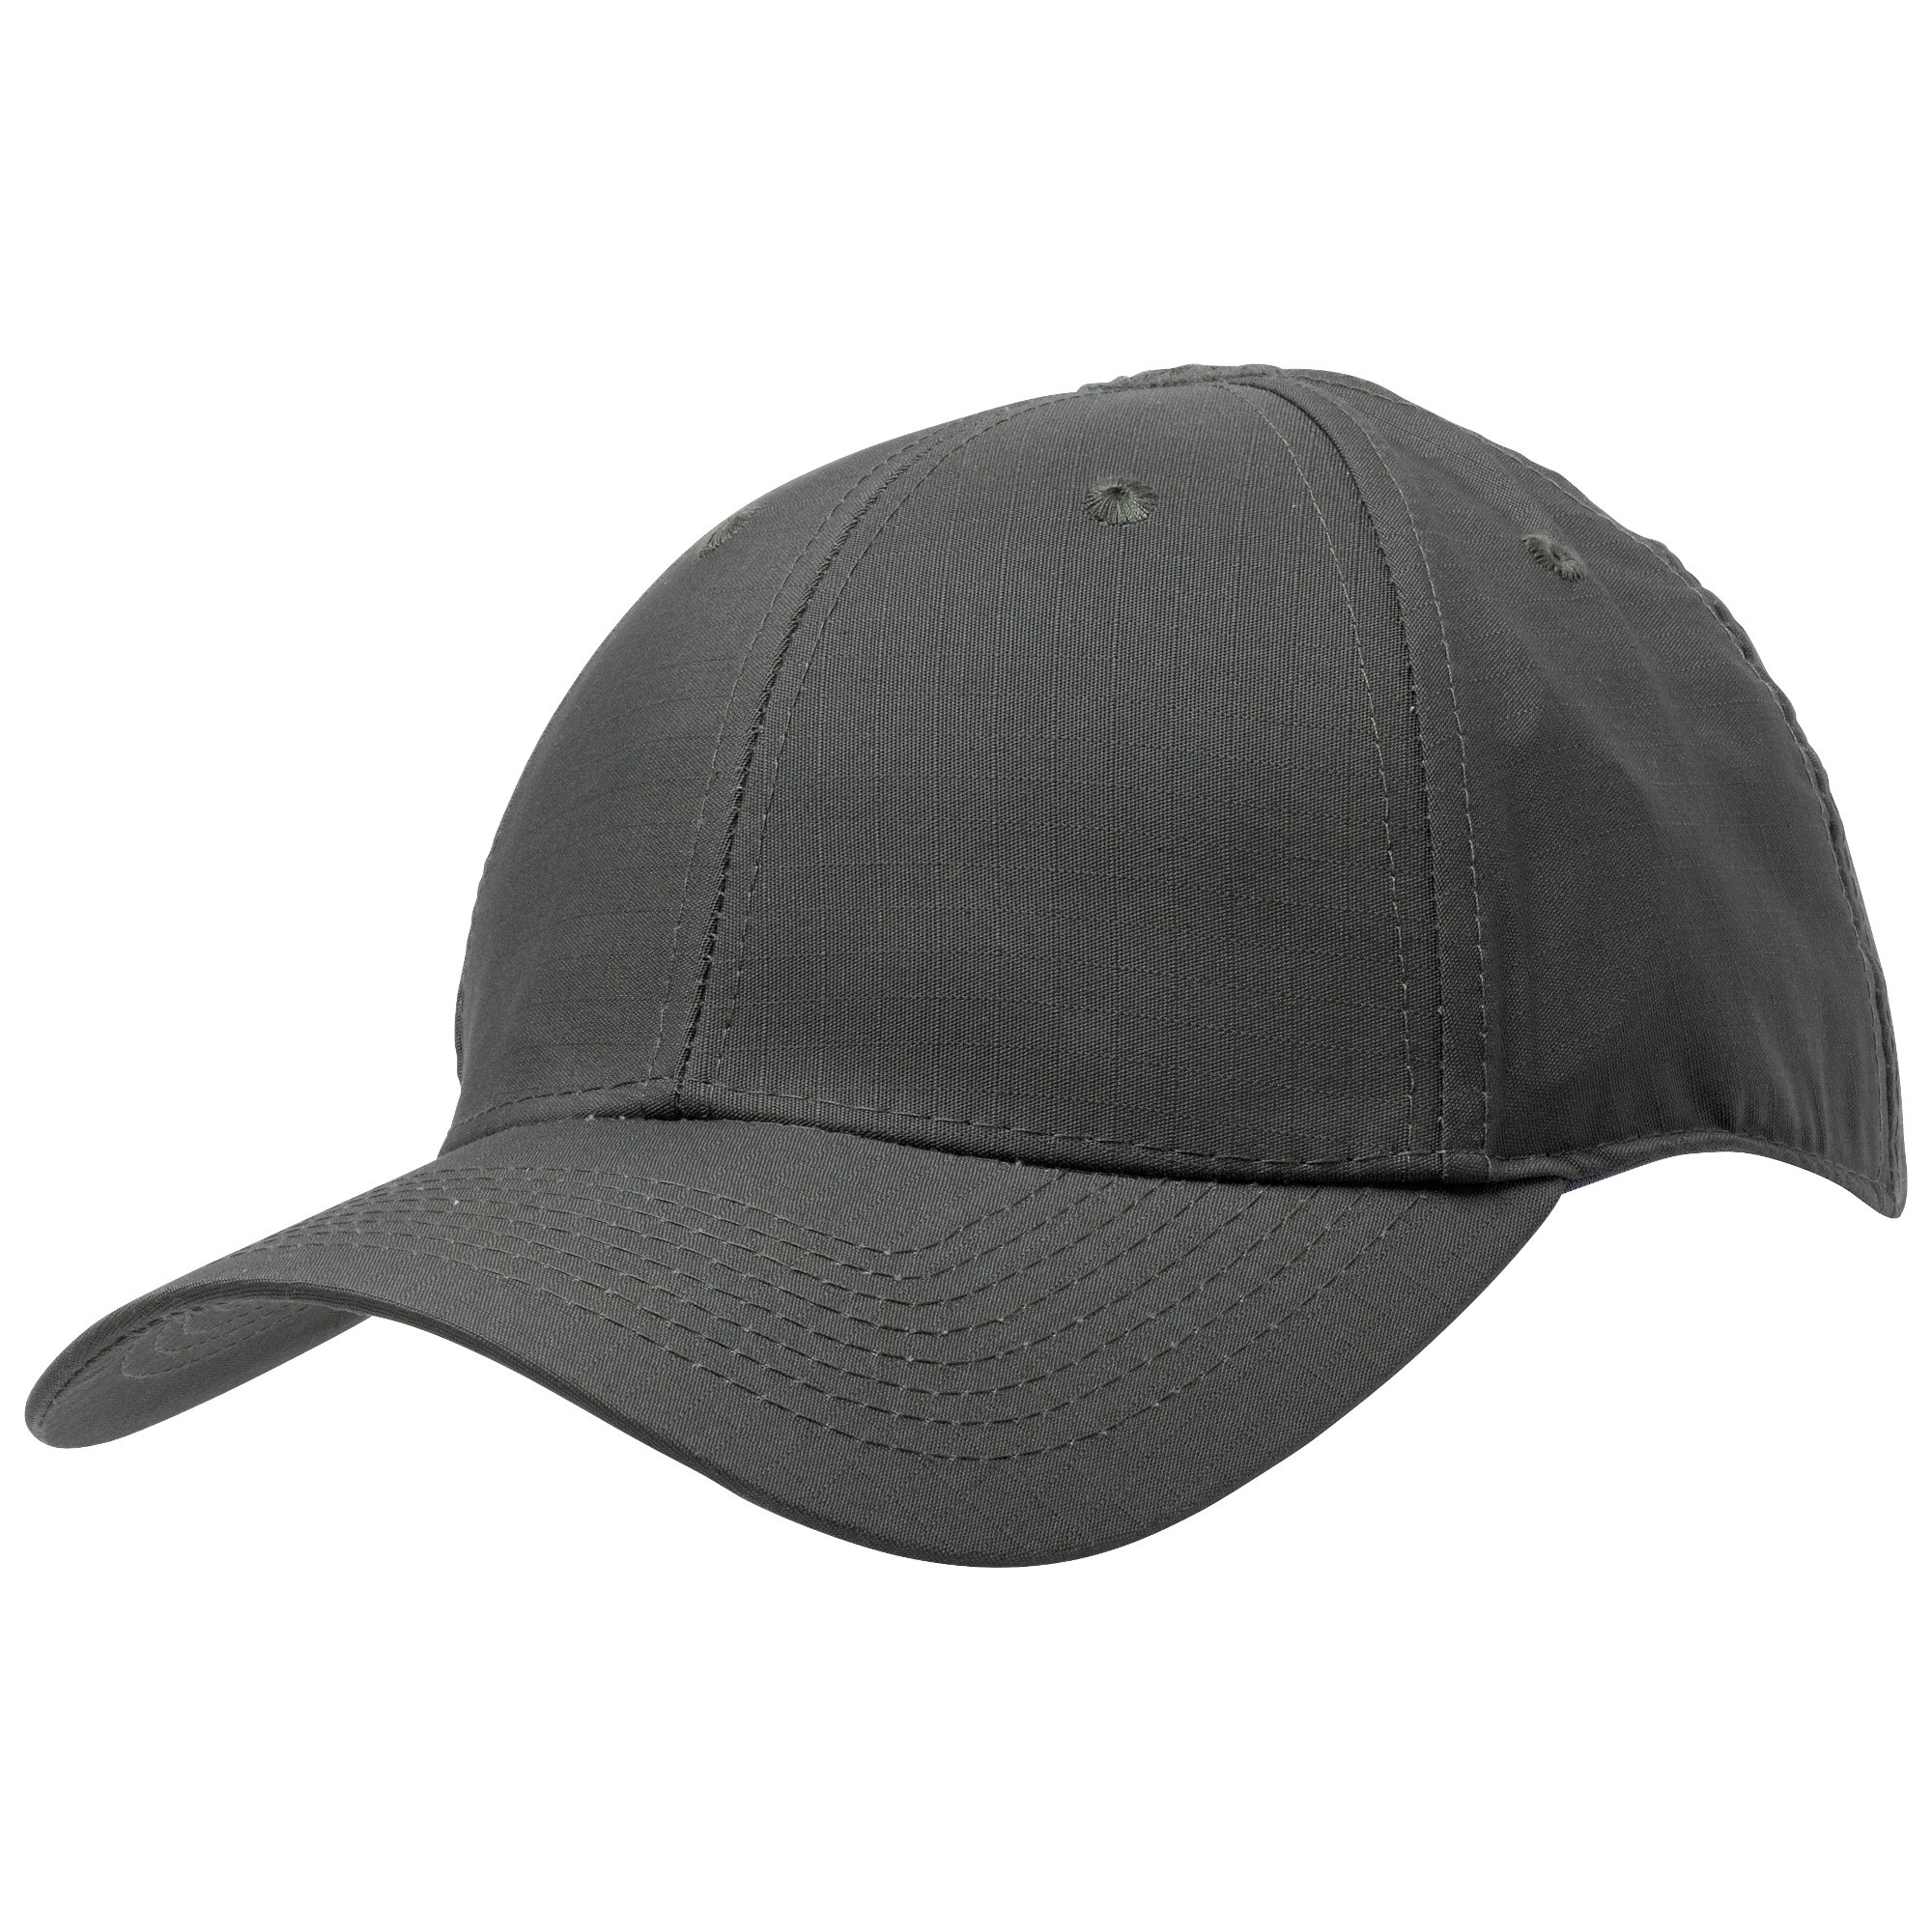 5.11 Adjustable Uniform Hat